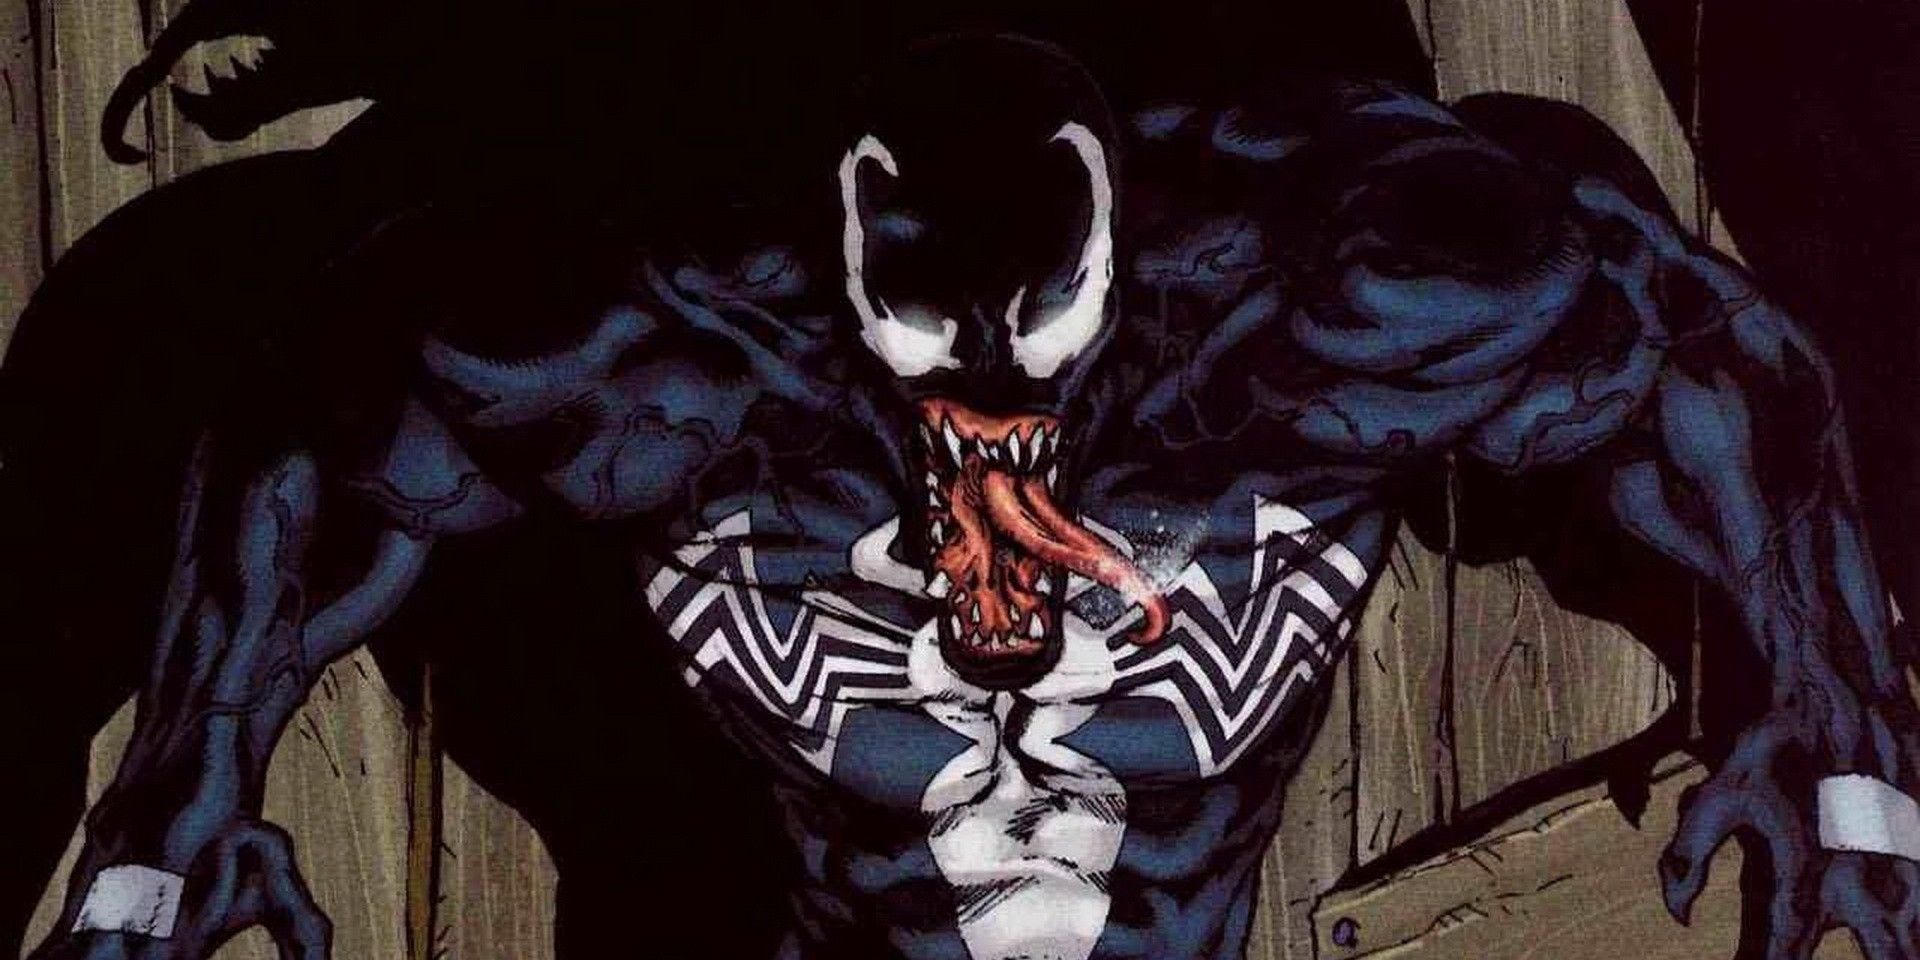 Venom Movie header